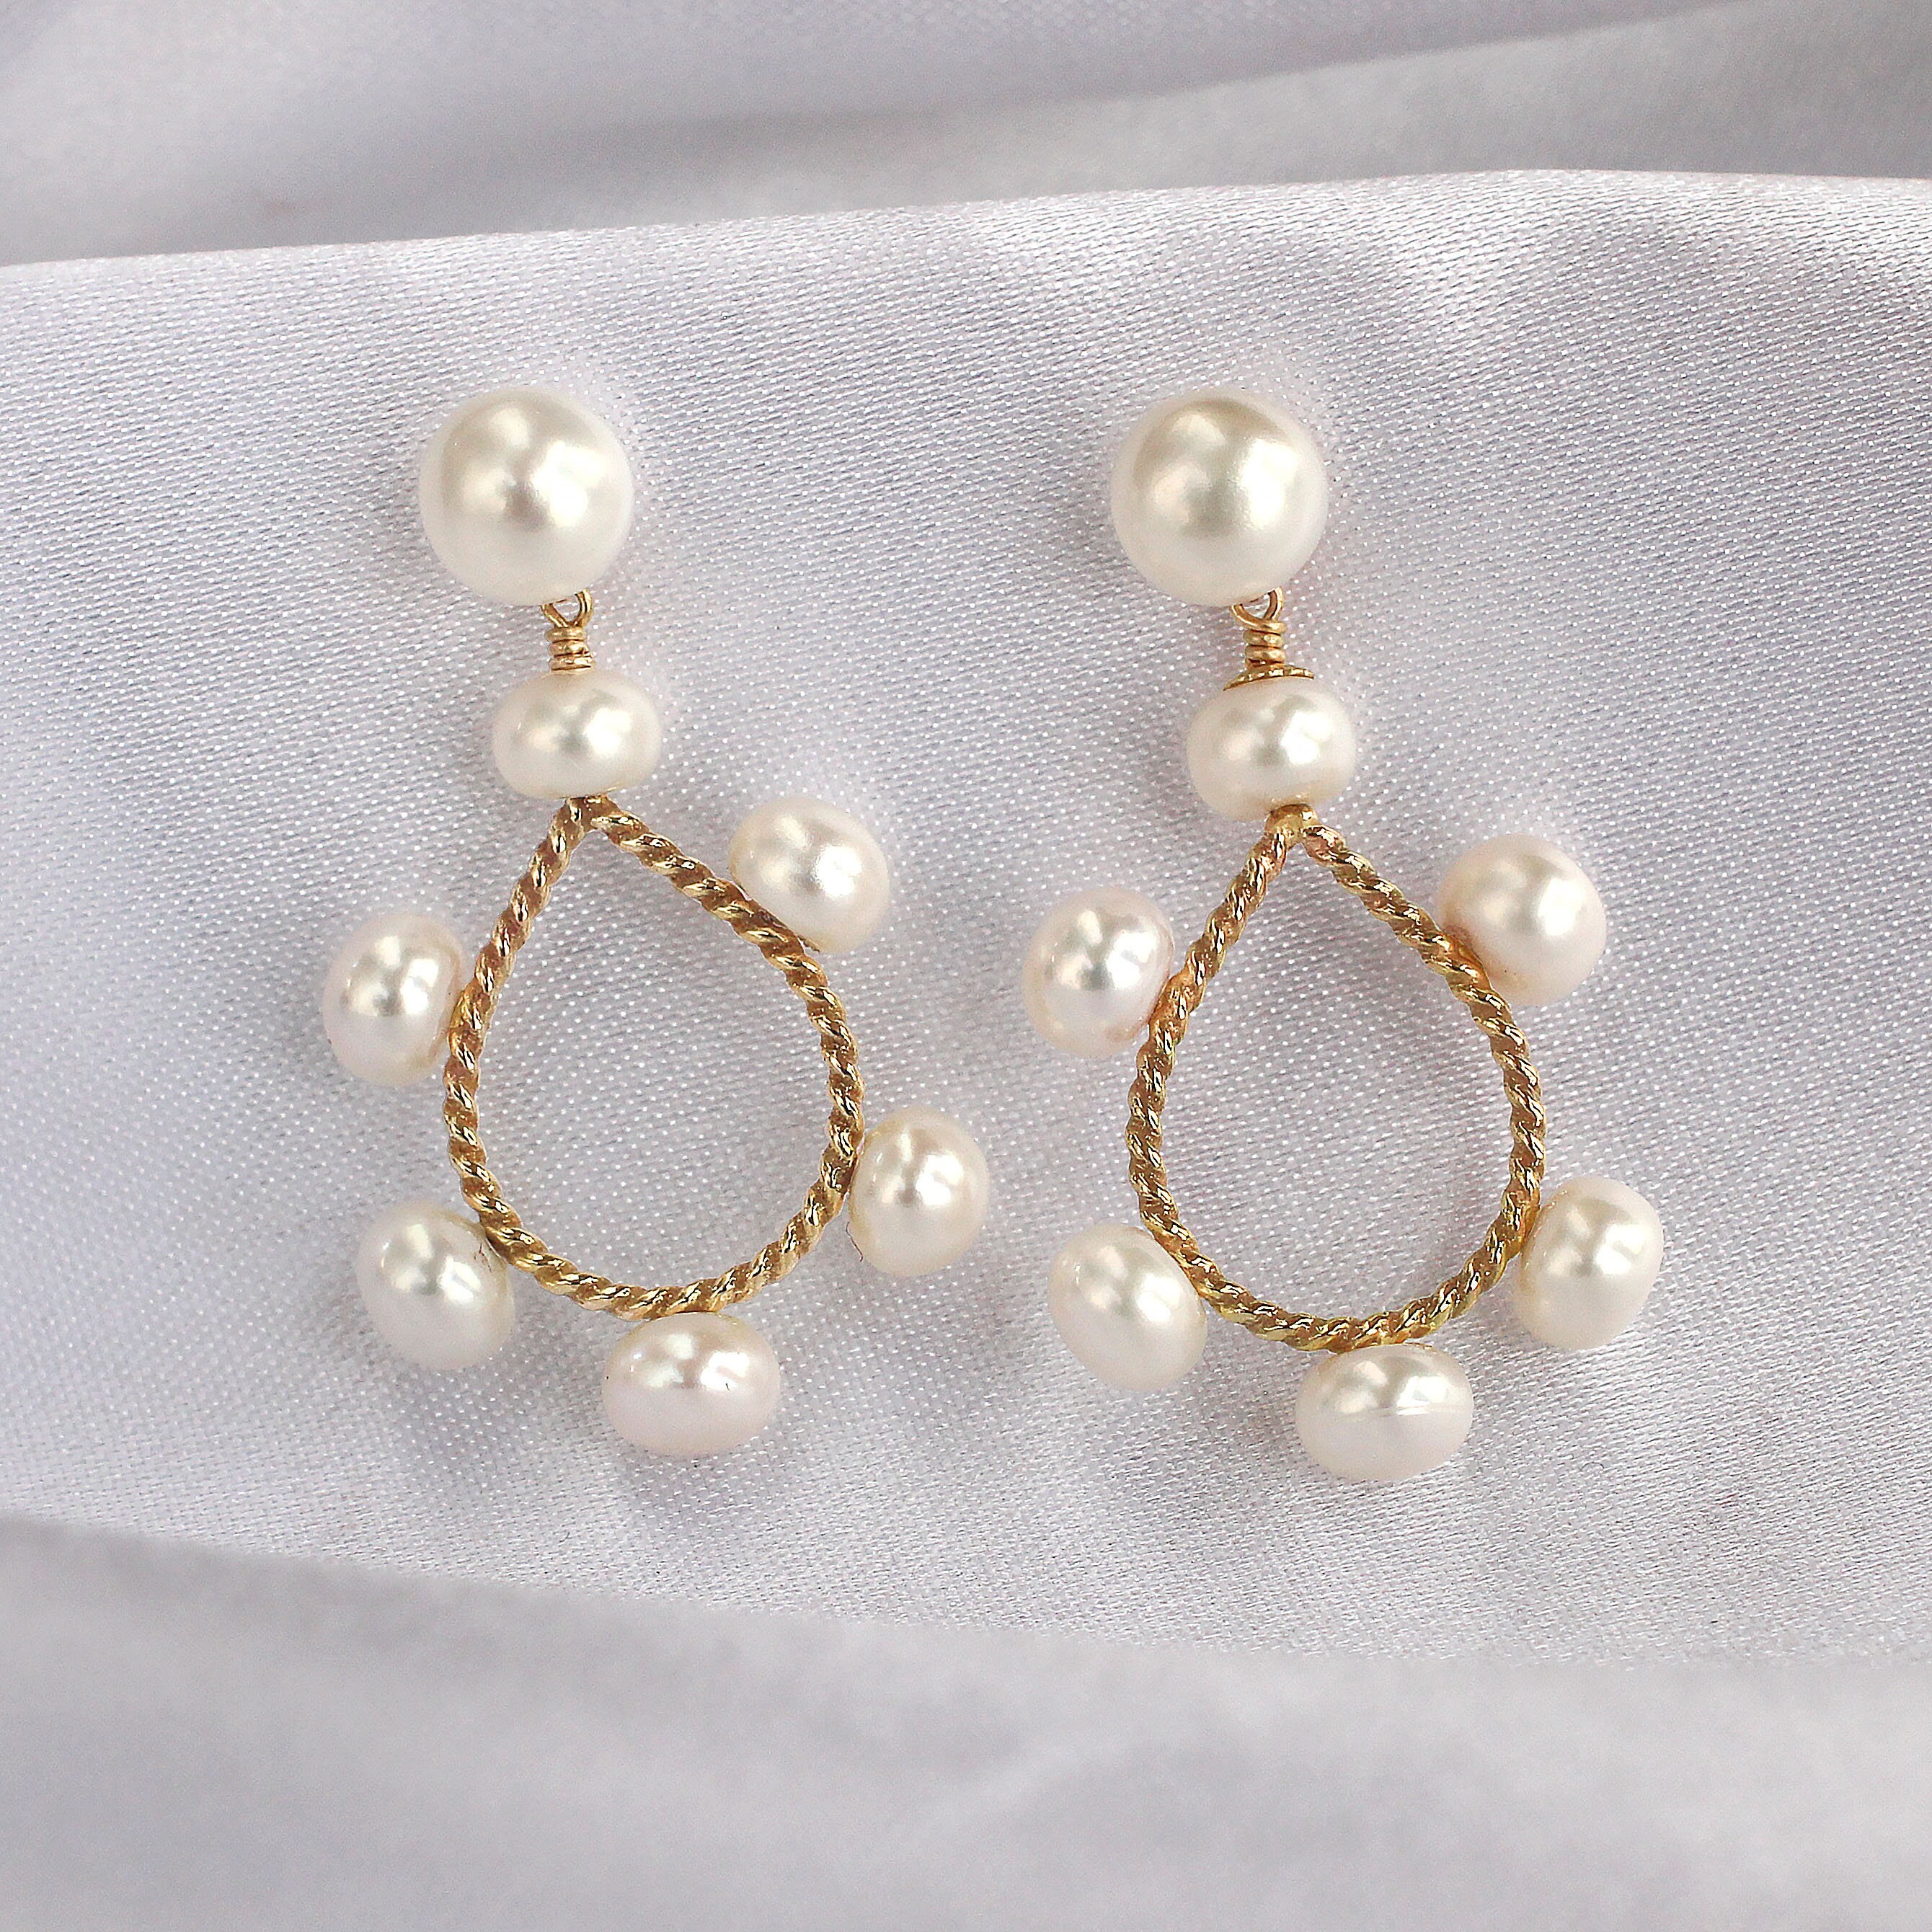 White Pearl Earrings 14k Gold Filled Freshwater Pearl Earrings - Etsy UK